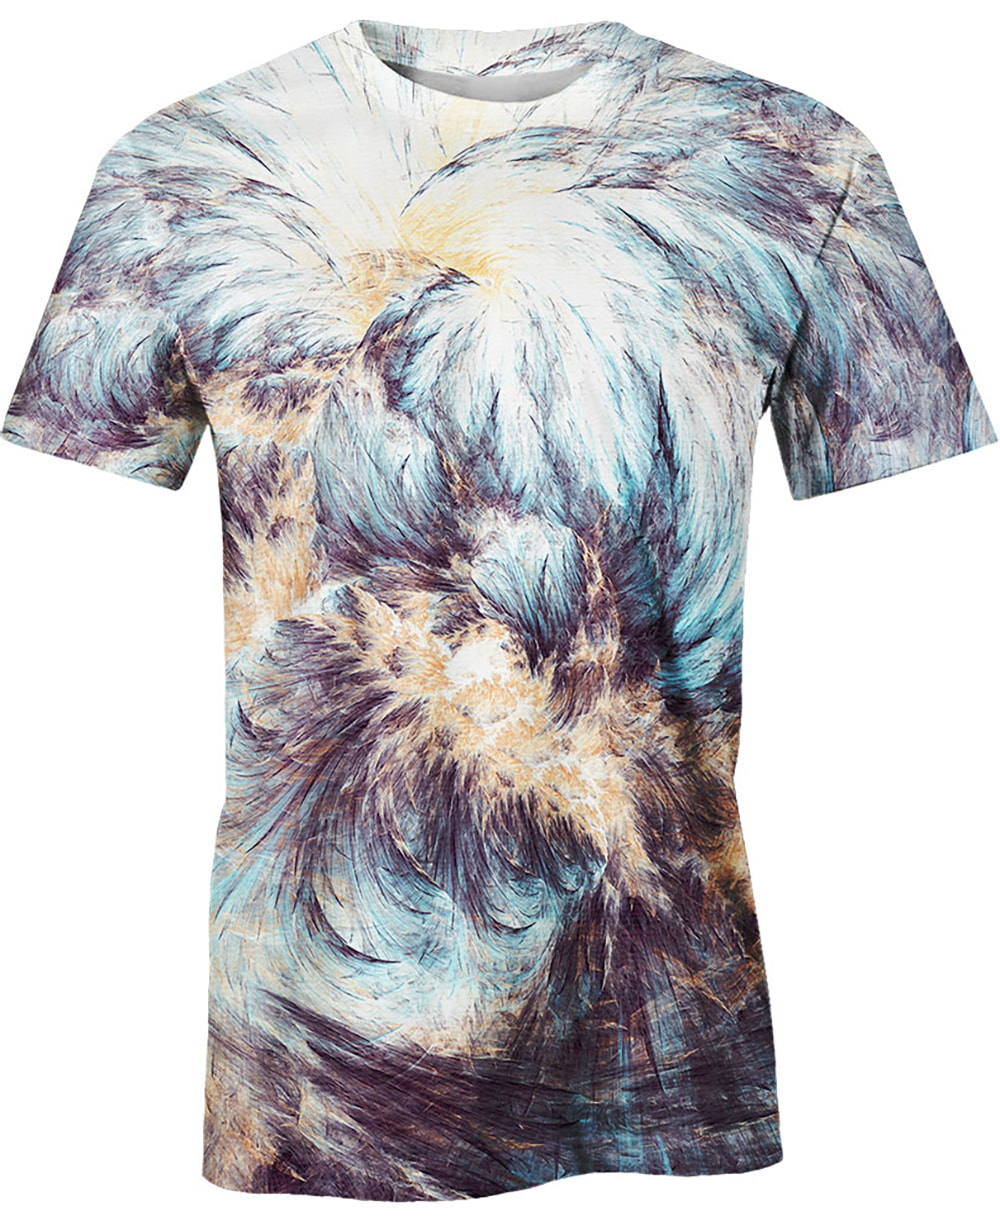 Amazing Angels Wings Art 3D Hoodie, T-Shirt, Zip Hoodie, Sweatshirt For Men and Women